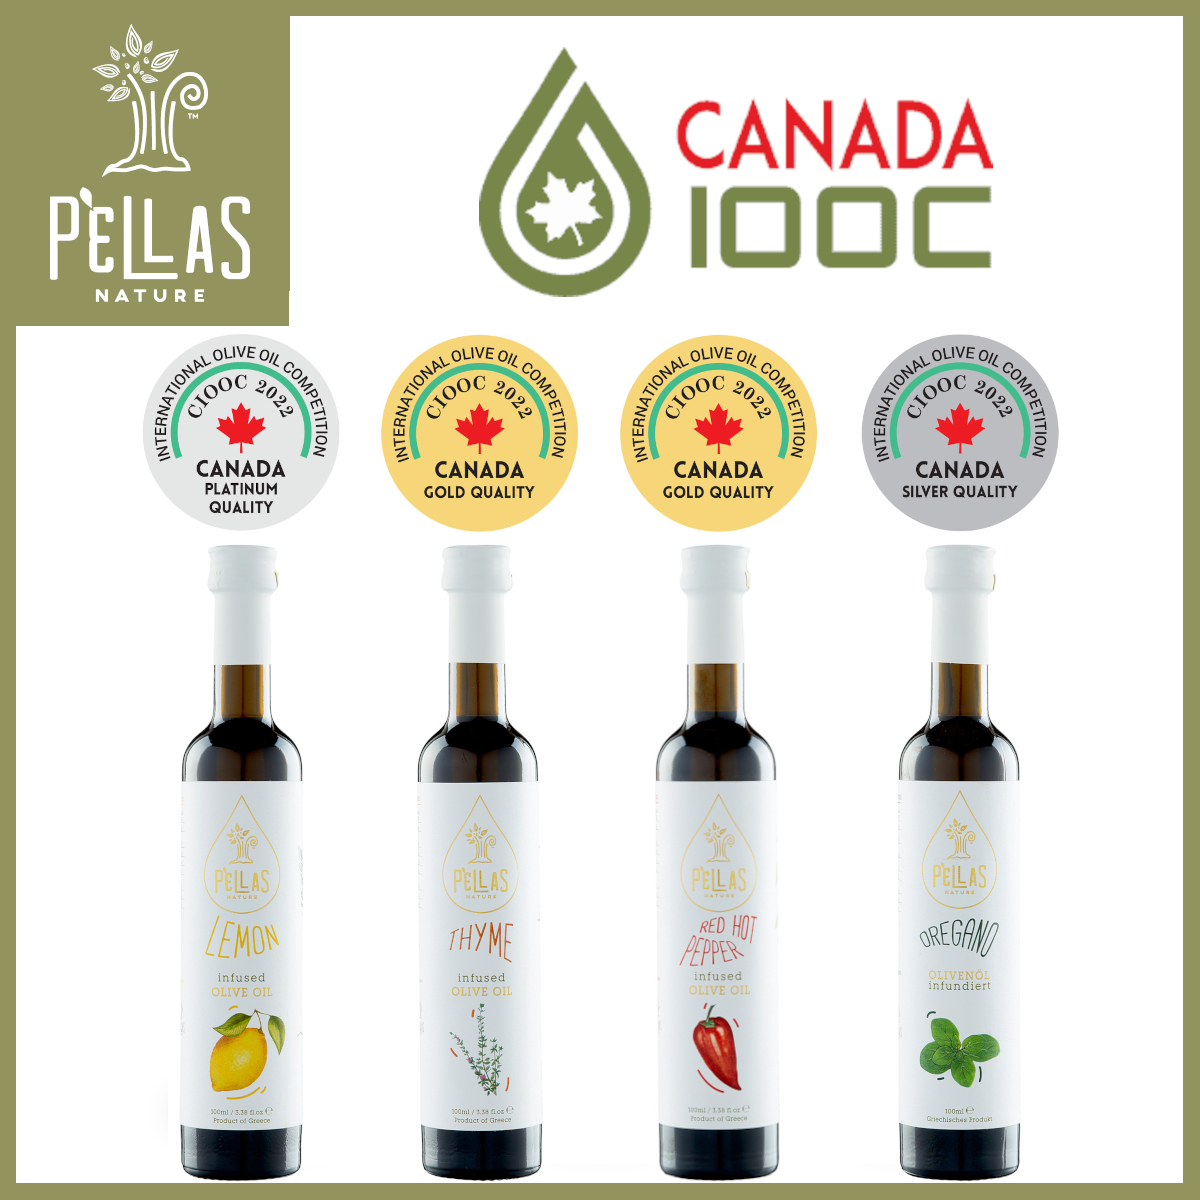 Canada IOOC 2022 awards